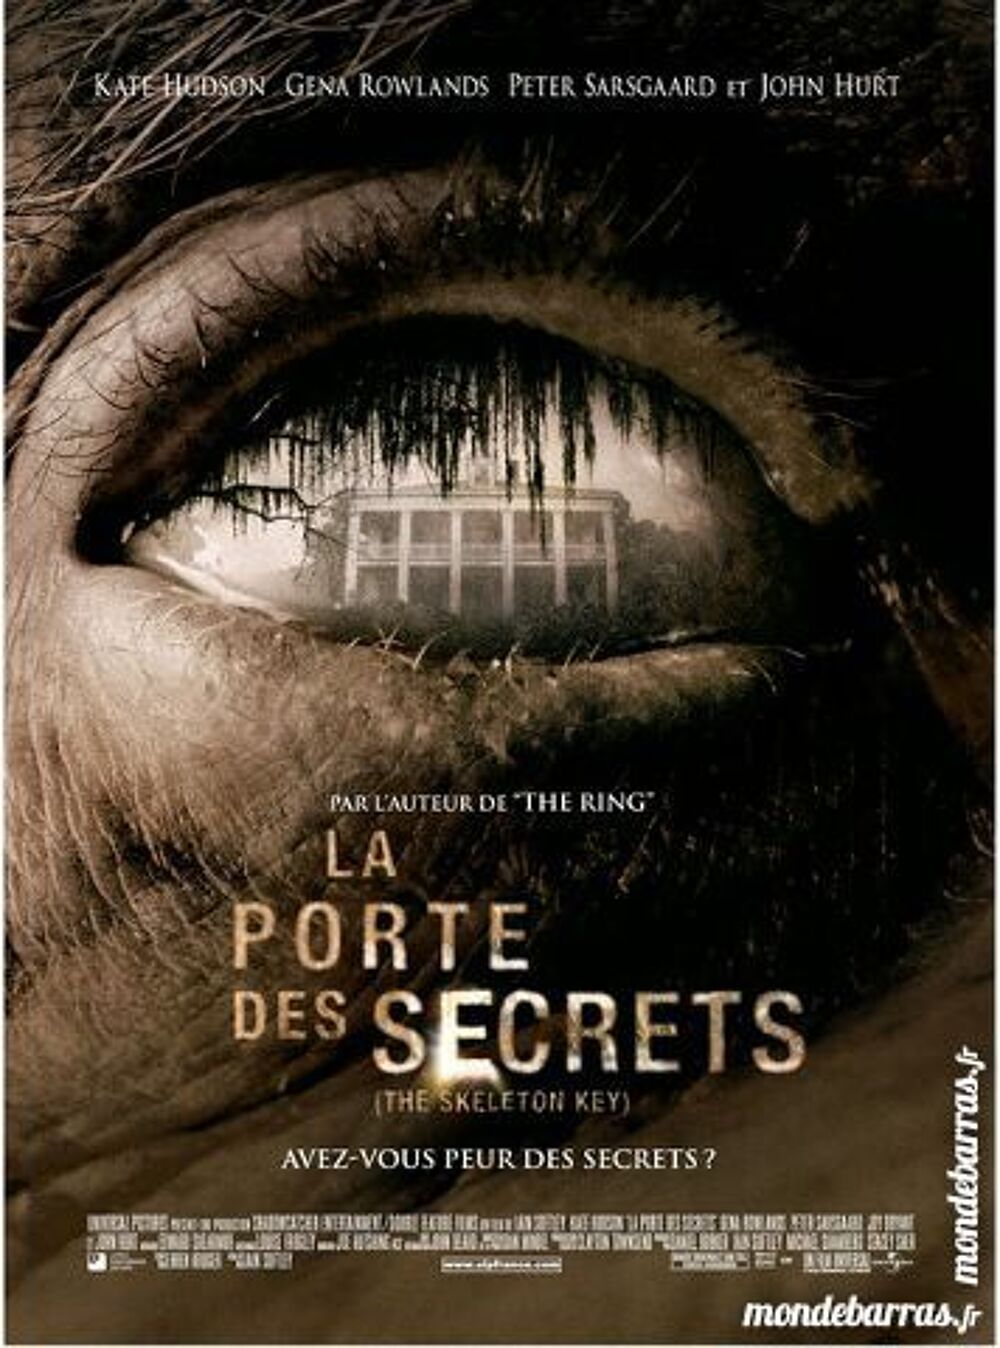 K7 Vhs: La Porte des Secrets (213) DVD et blu-ray